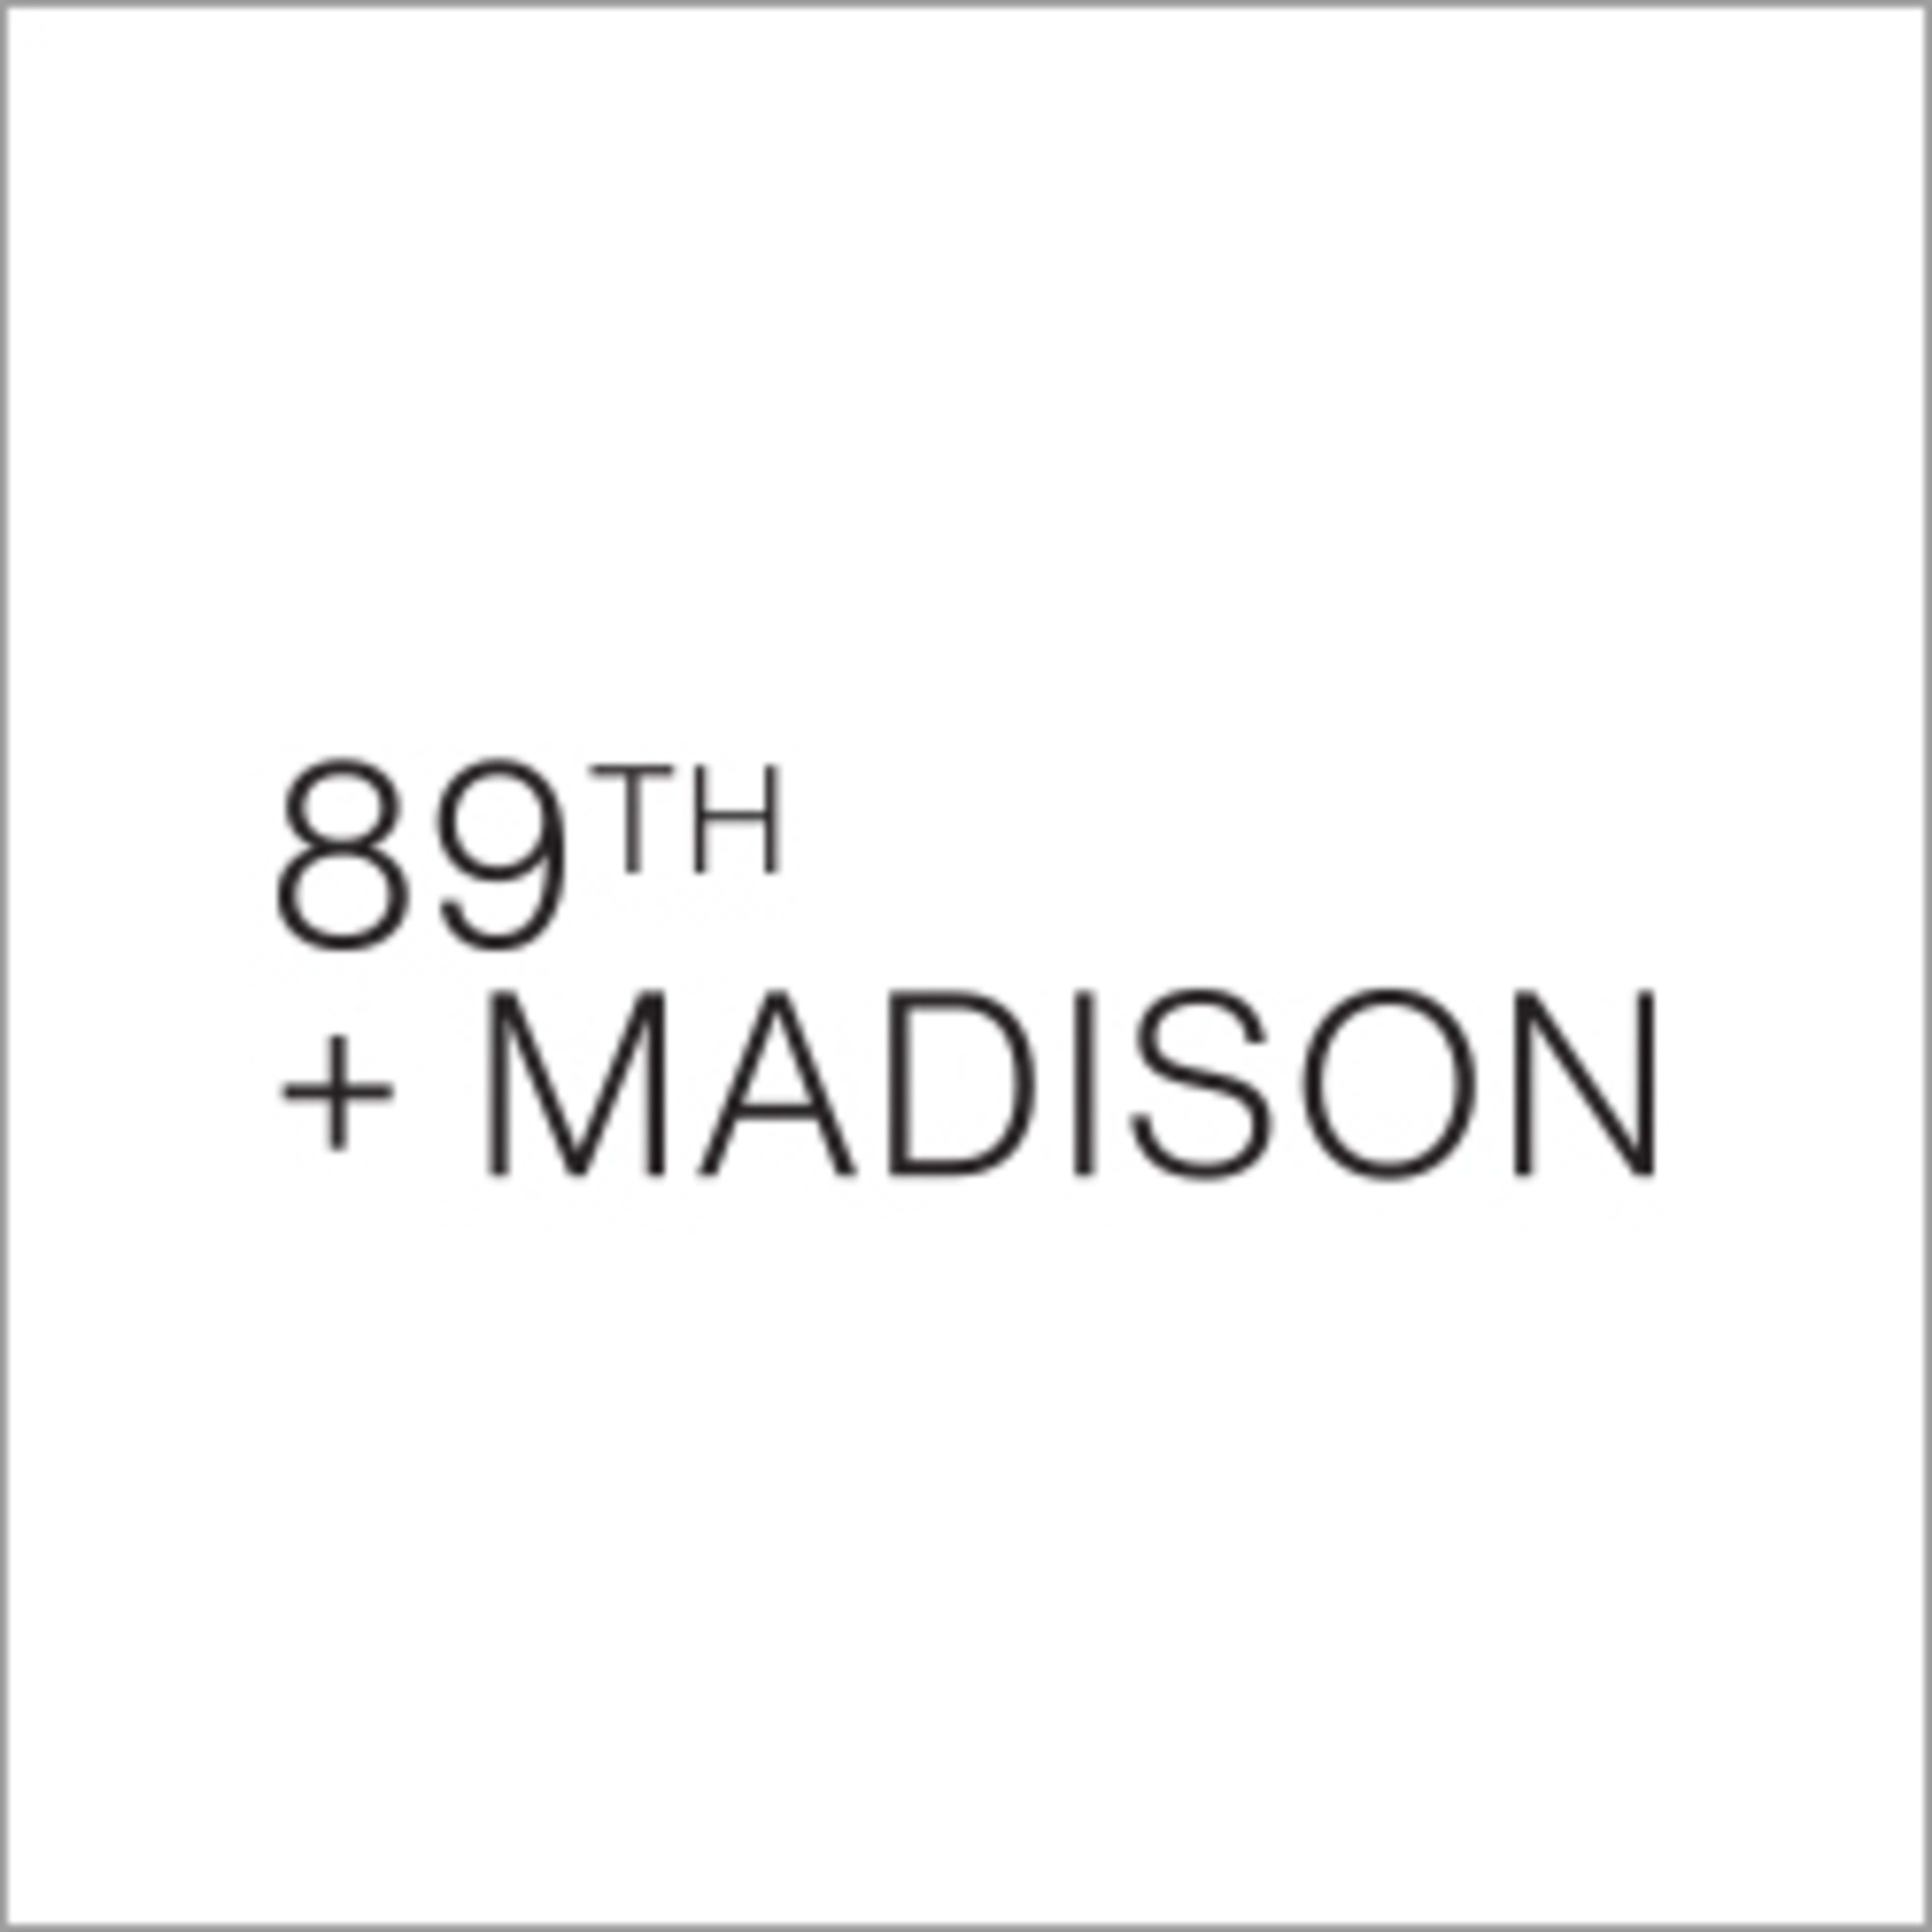 89th + MadisonCode